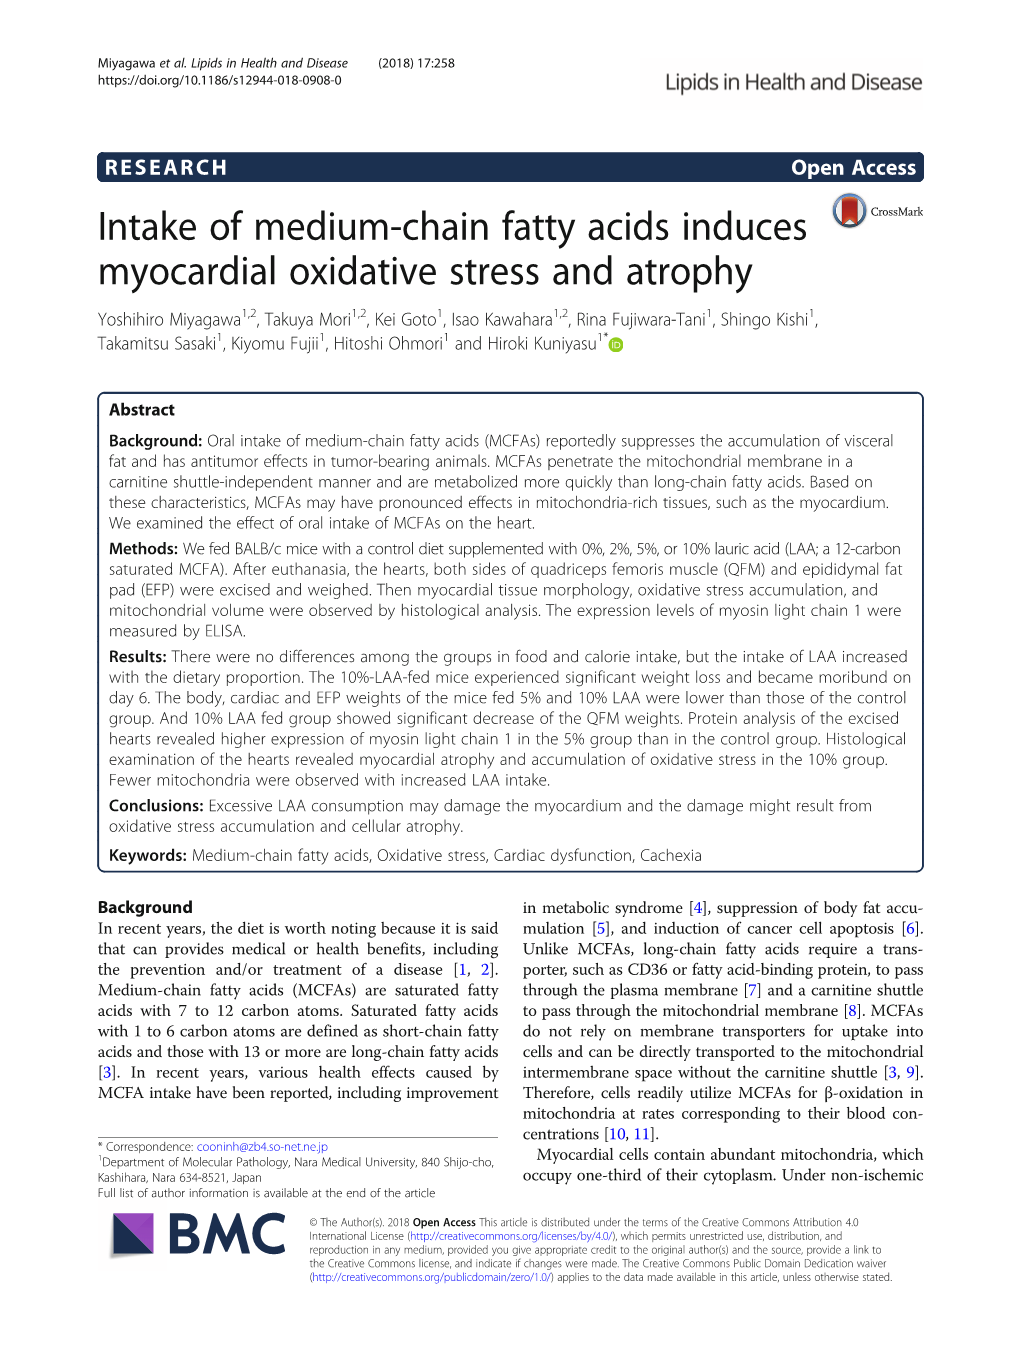 Intake of Medium-Chain Fatty Acids Induces Myocardial Oxidative Stress